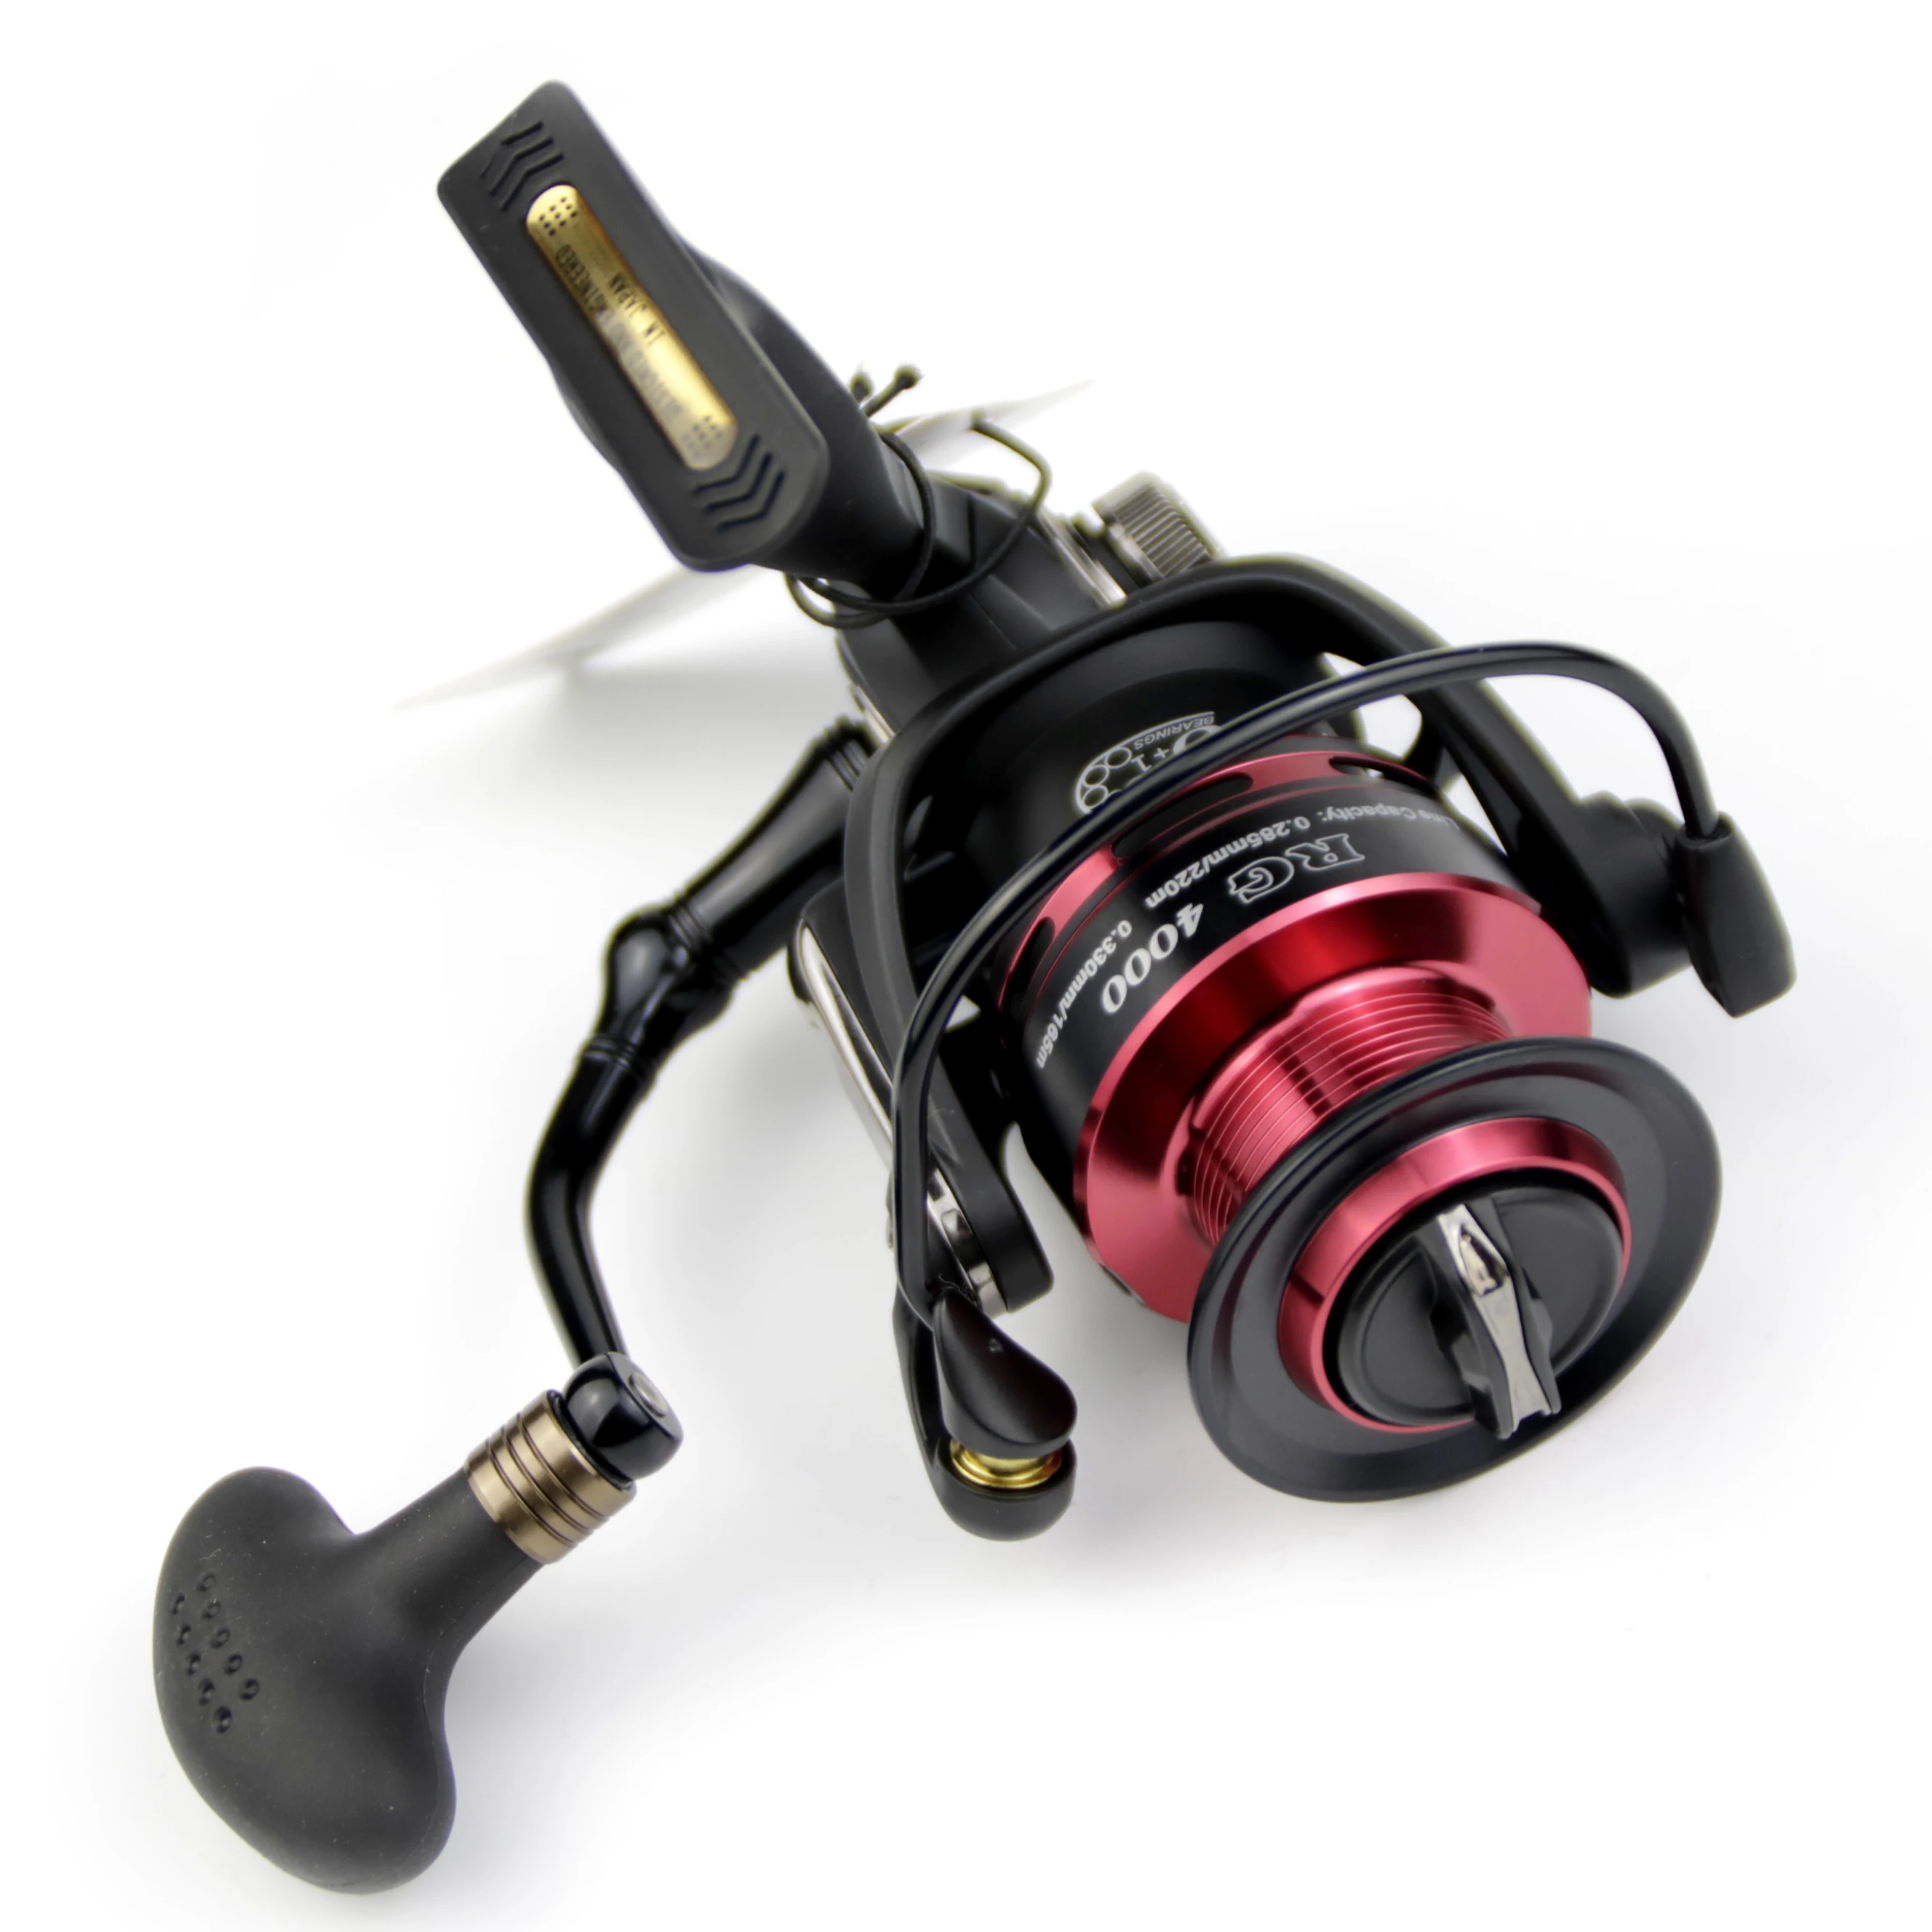 

Ryobi Smap Light Fishing Reel Metal Spool 6+1BB Gear Ratio5.0:1Max Drag 10Kg Waterproof Spinning Reel For Bass Pike Fishing Gear, Black+red